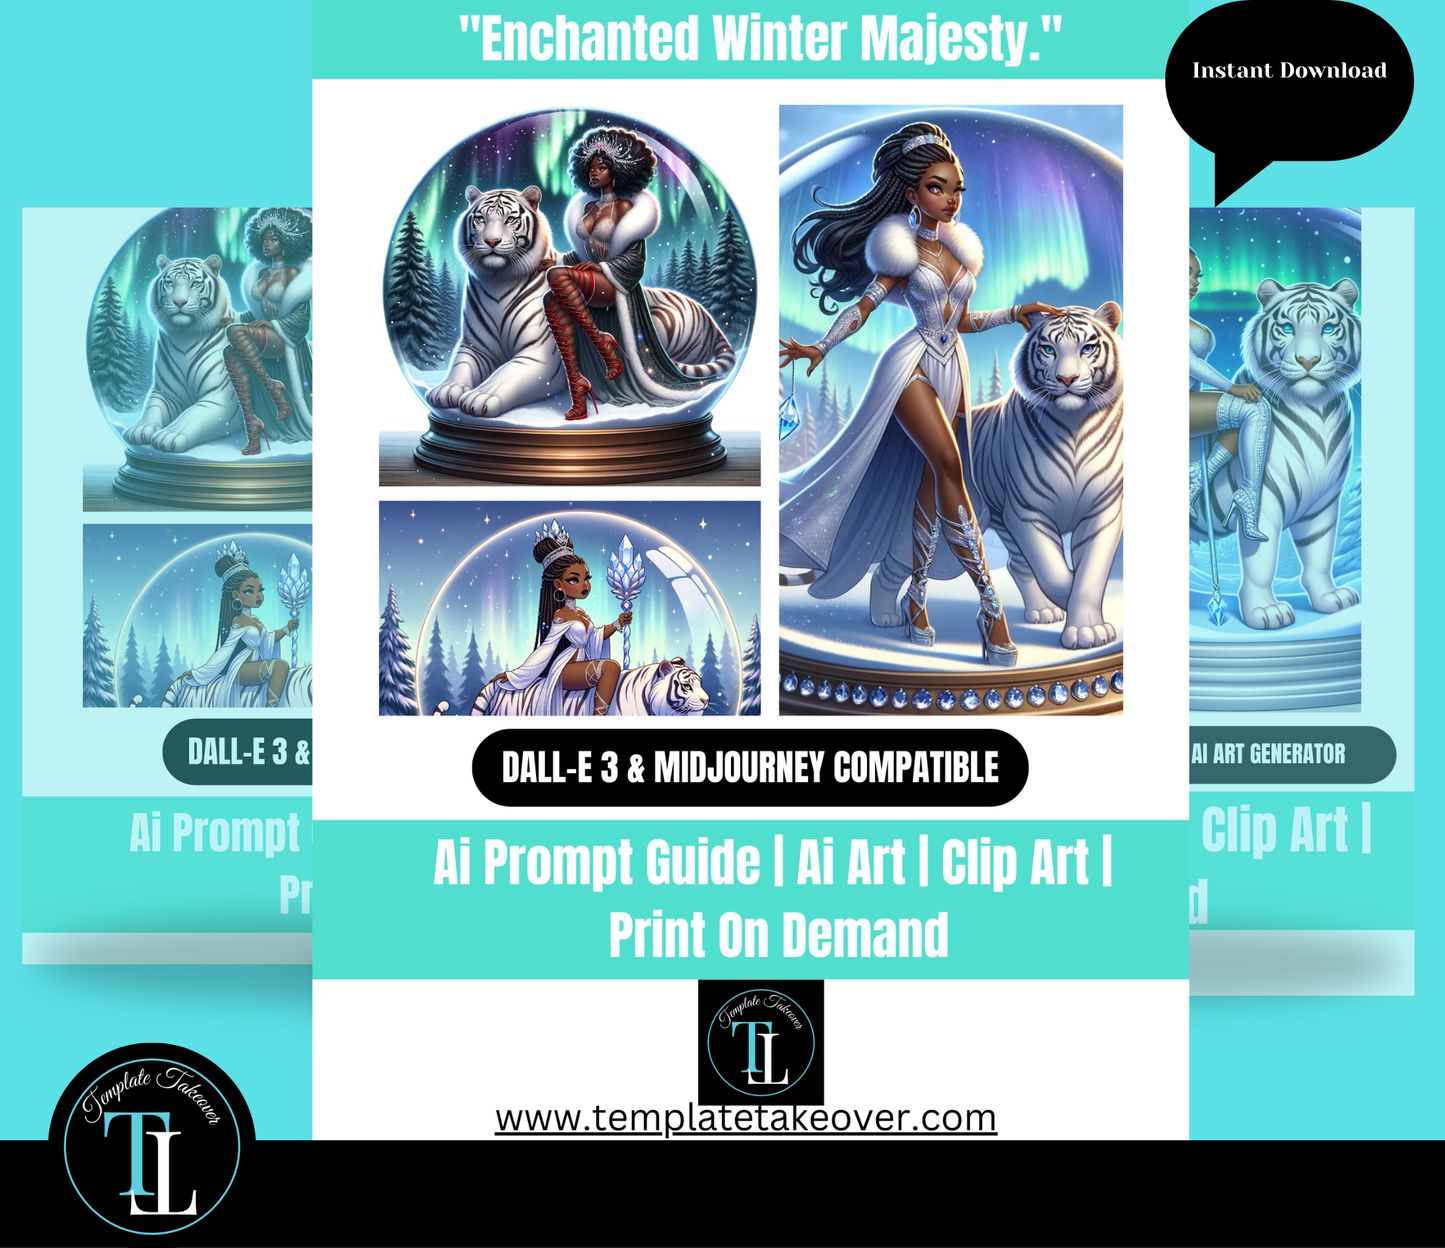 "Enchanted Winter Majesty"